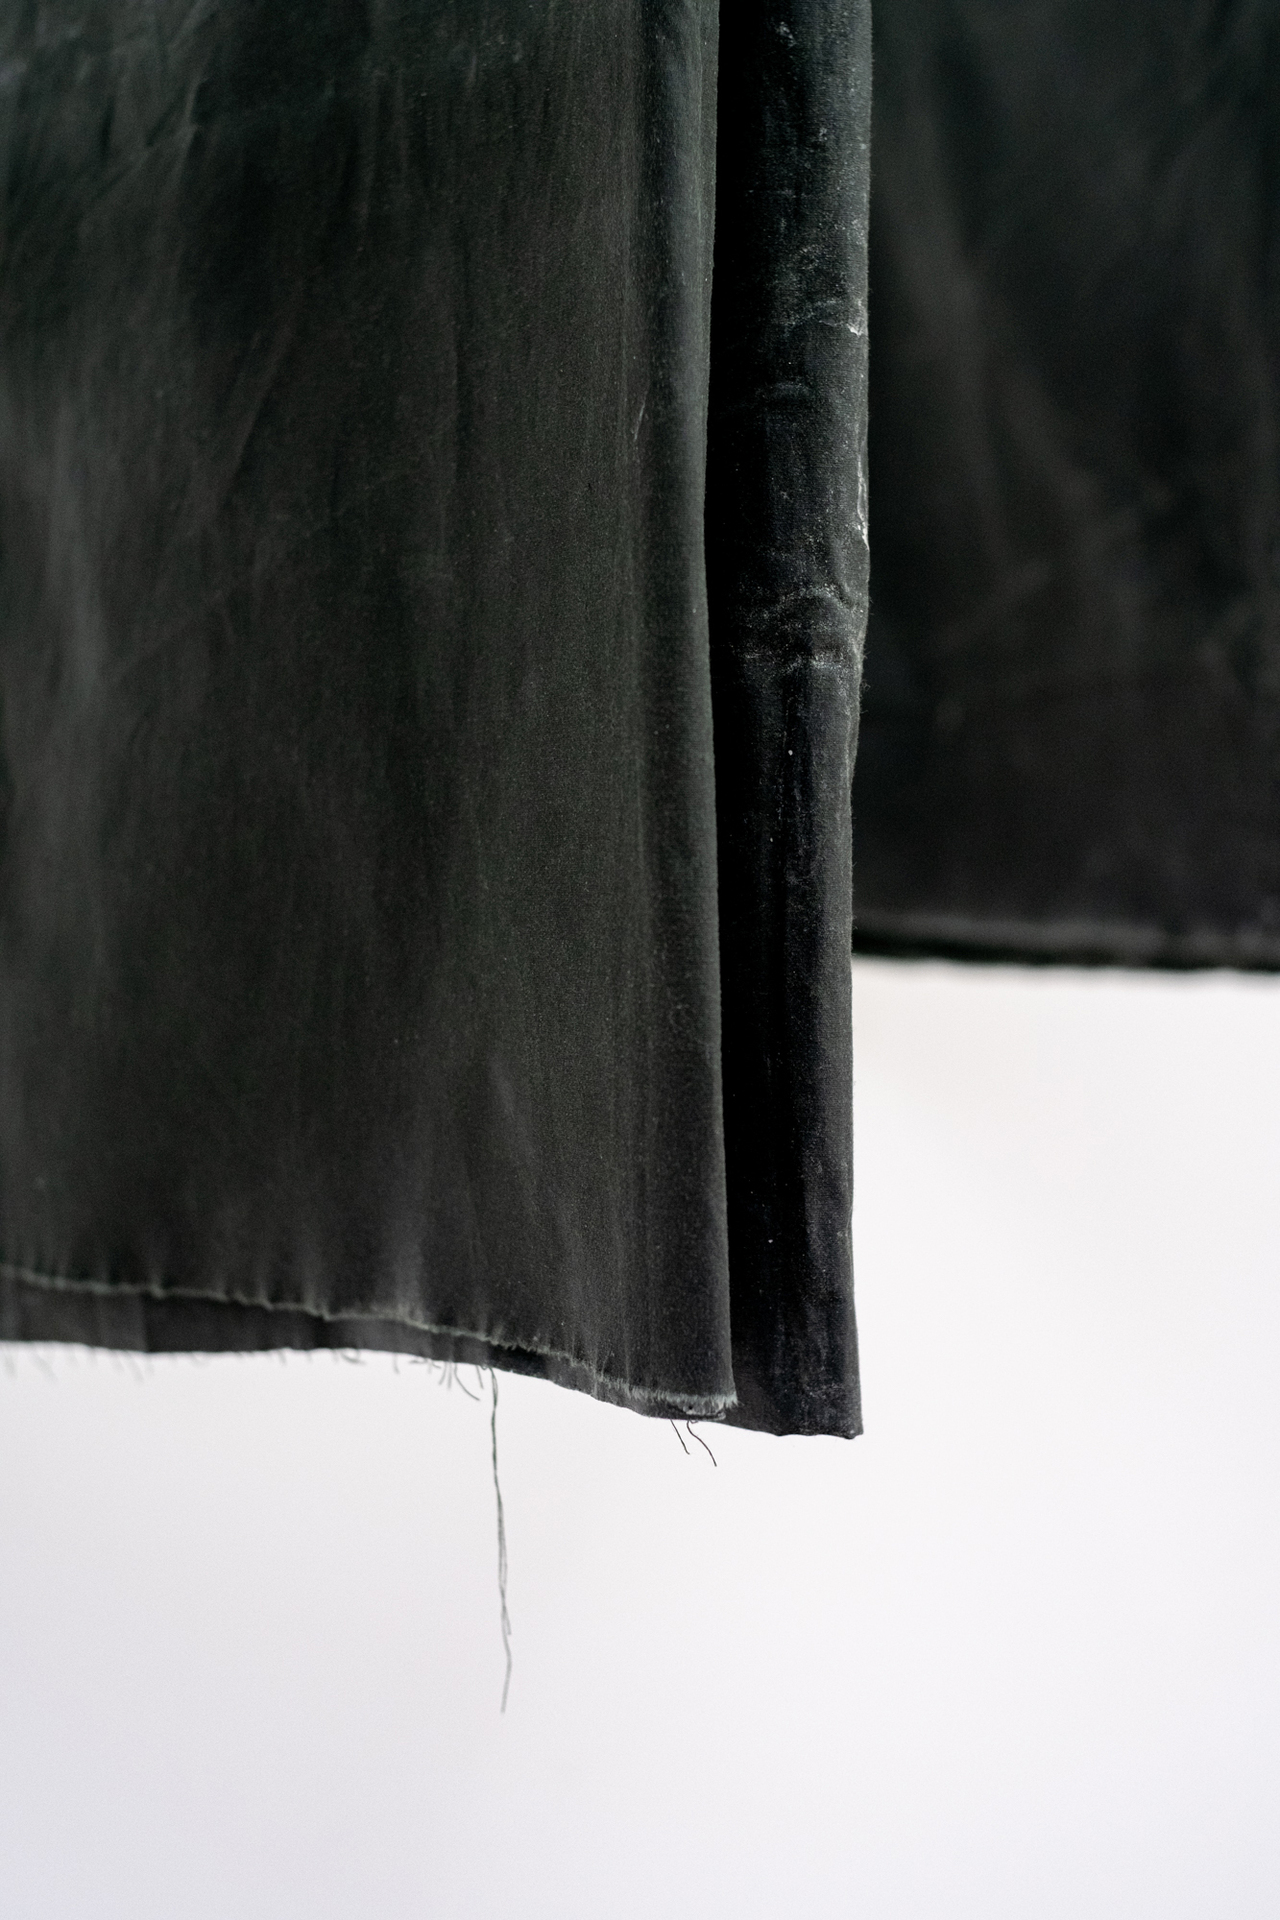 Malte Möller, Untitled (Jagdstoff), 2021, Wax cloth, wax emulsion,screws, wall mount, wooden stick, variable dimensions